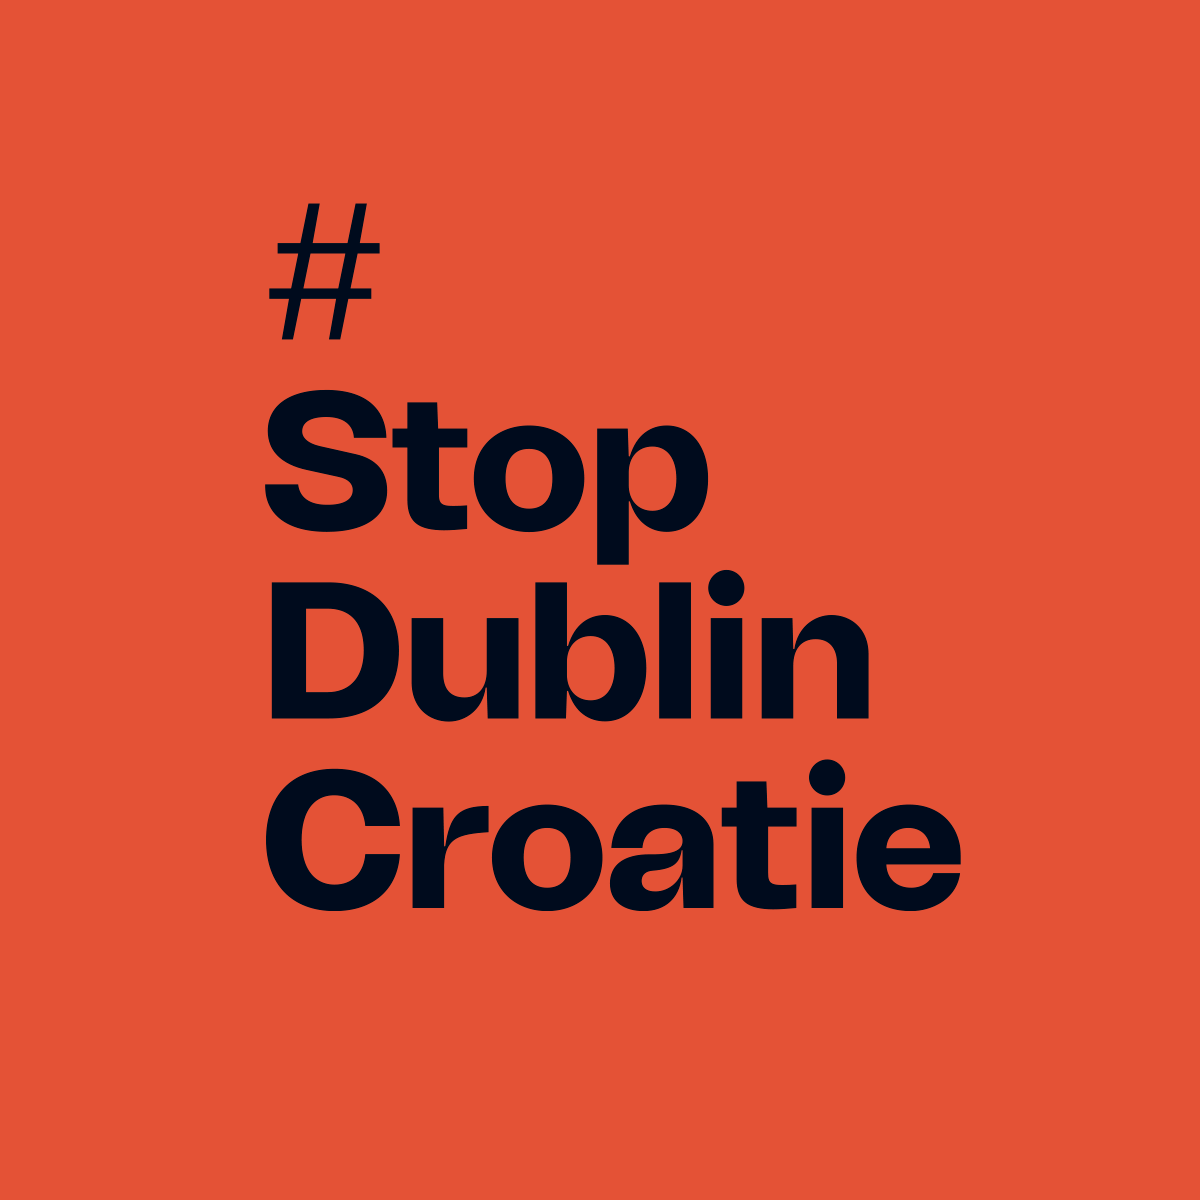 #StopDublinCroatie